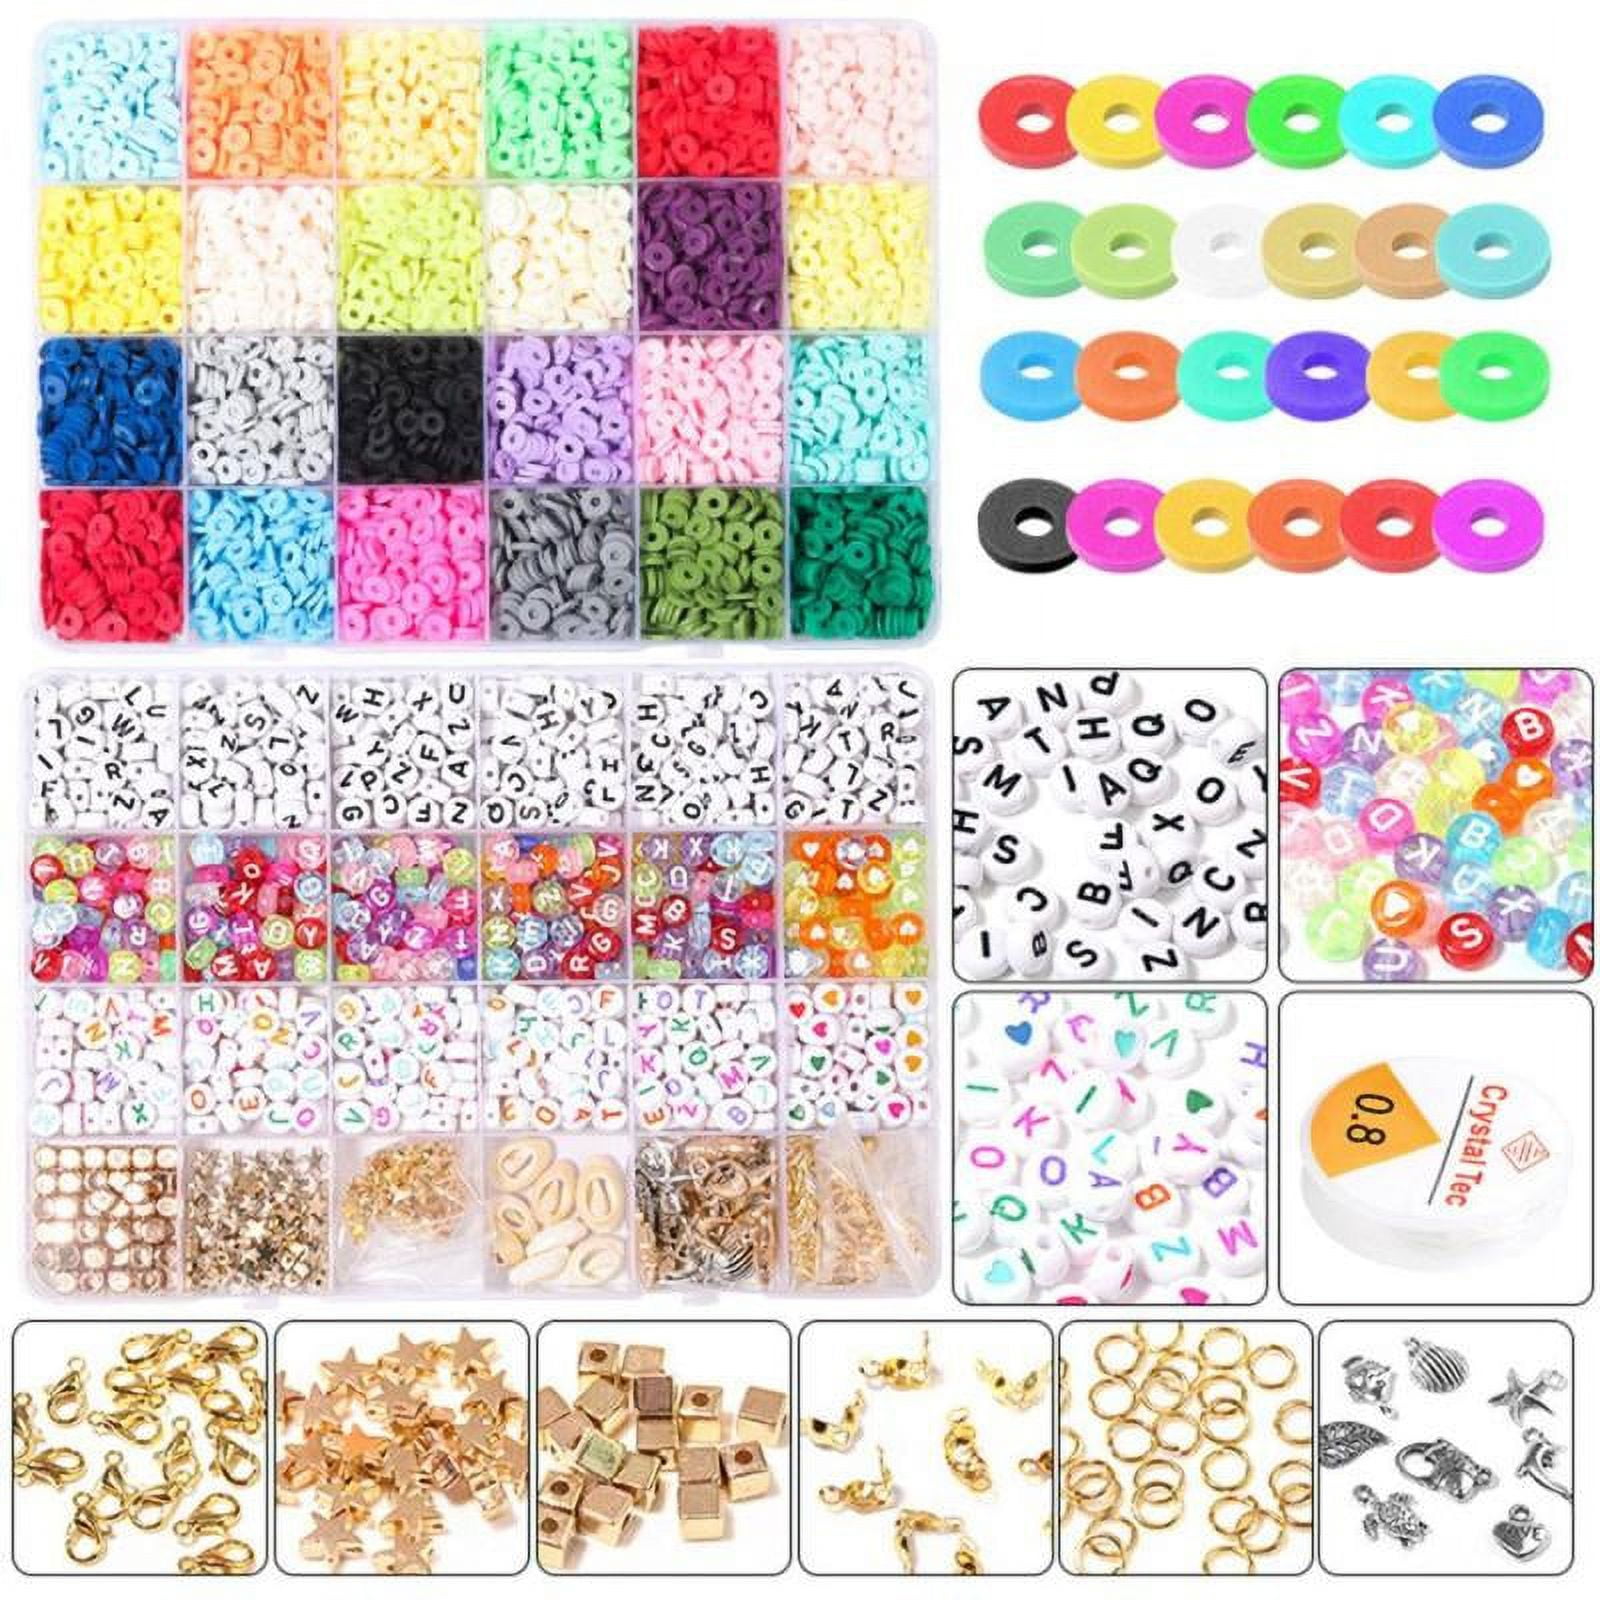 Redtwo 15000 Pcs Clay Beads Bracelet Making Kit, 3 Boxes 72 Colors  Friendship Br